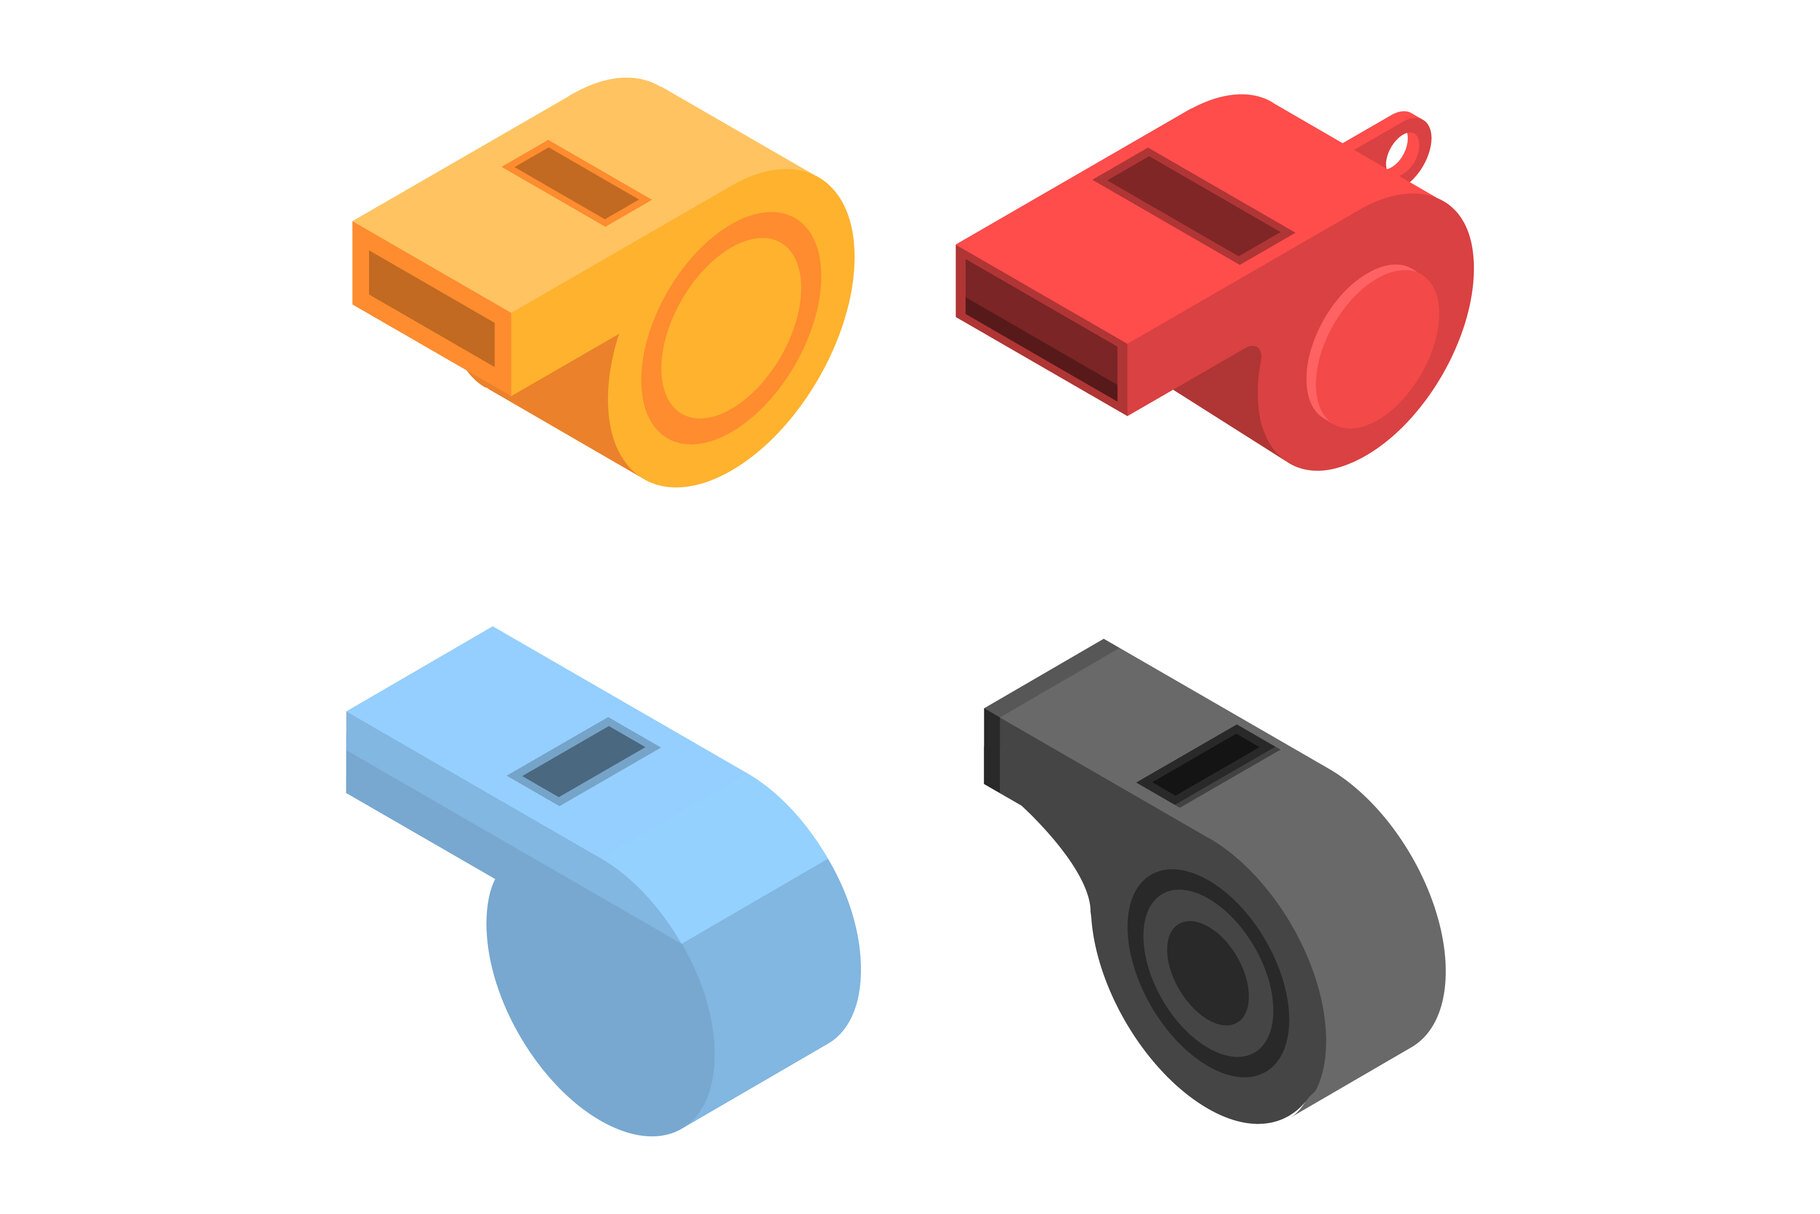 Whistle icon set, isometric style cover image.